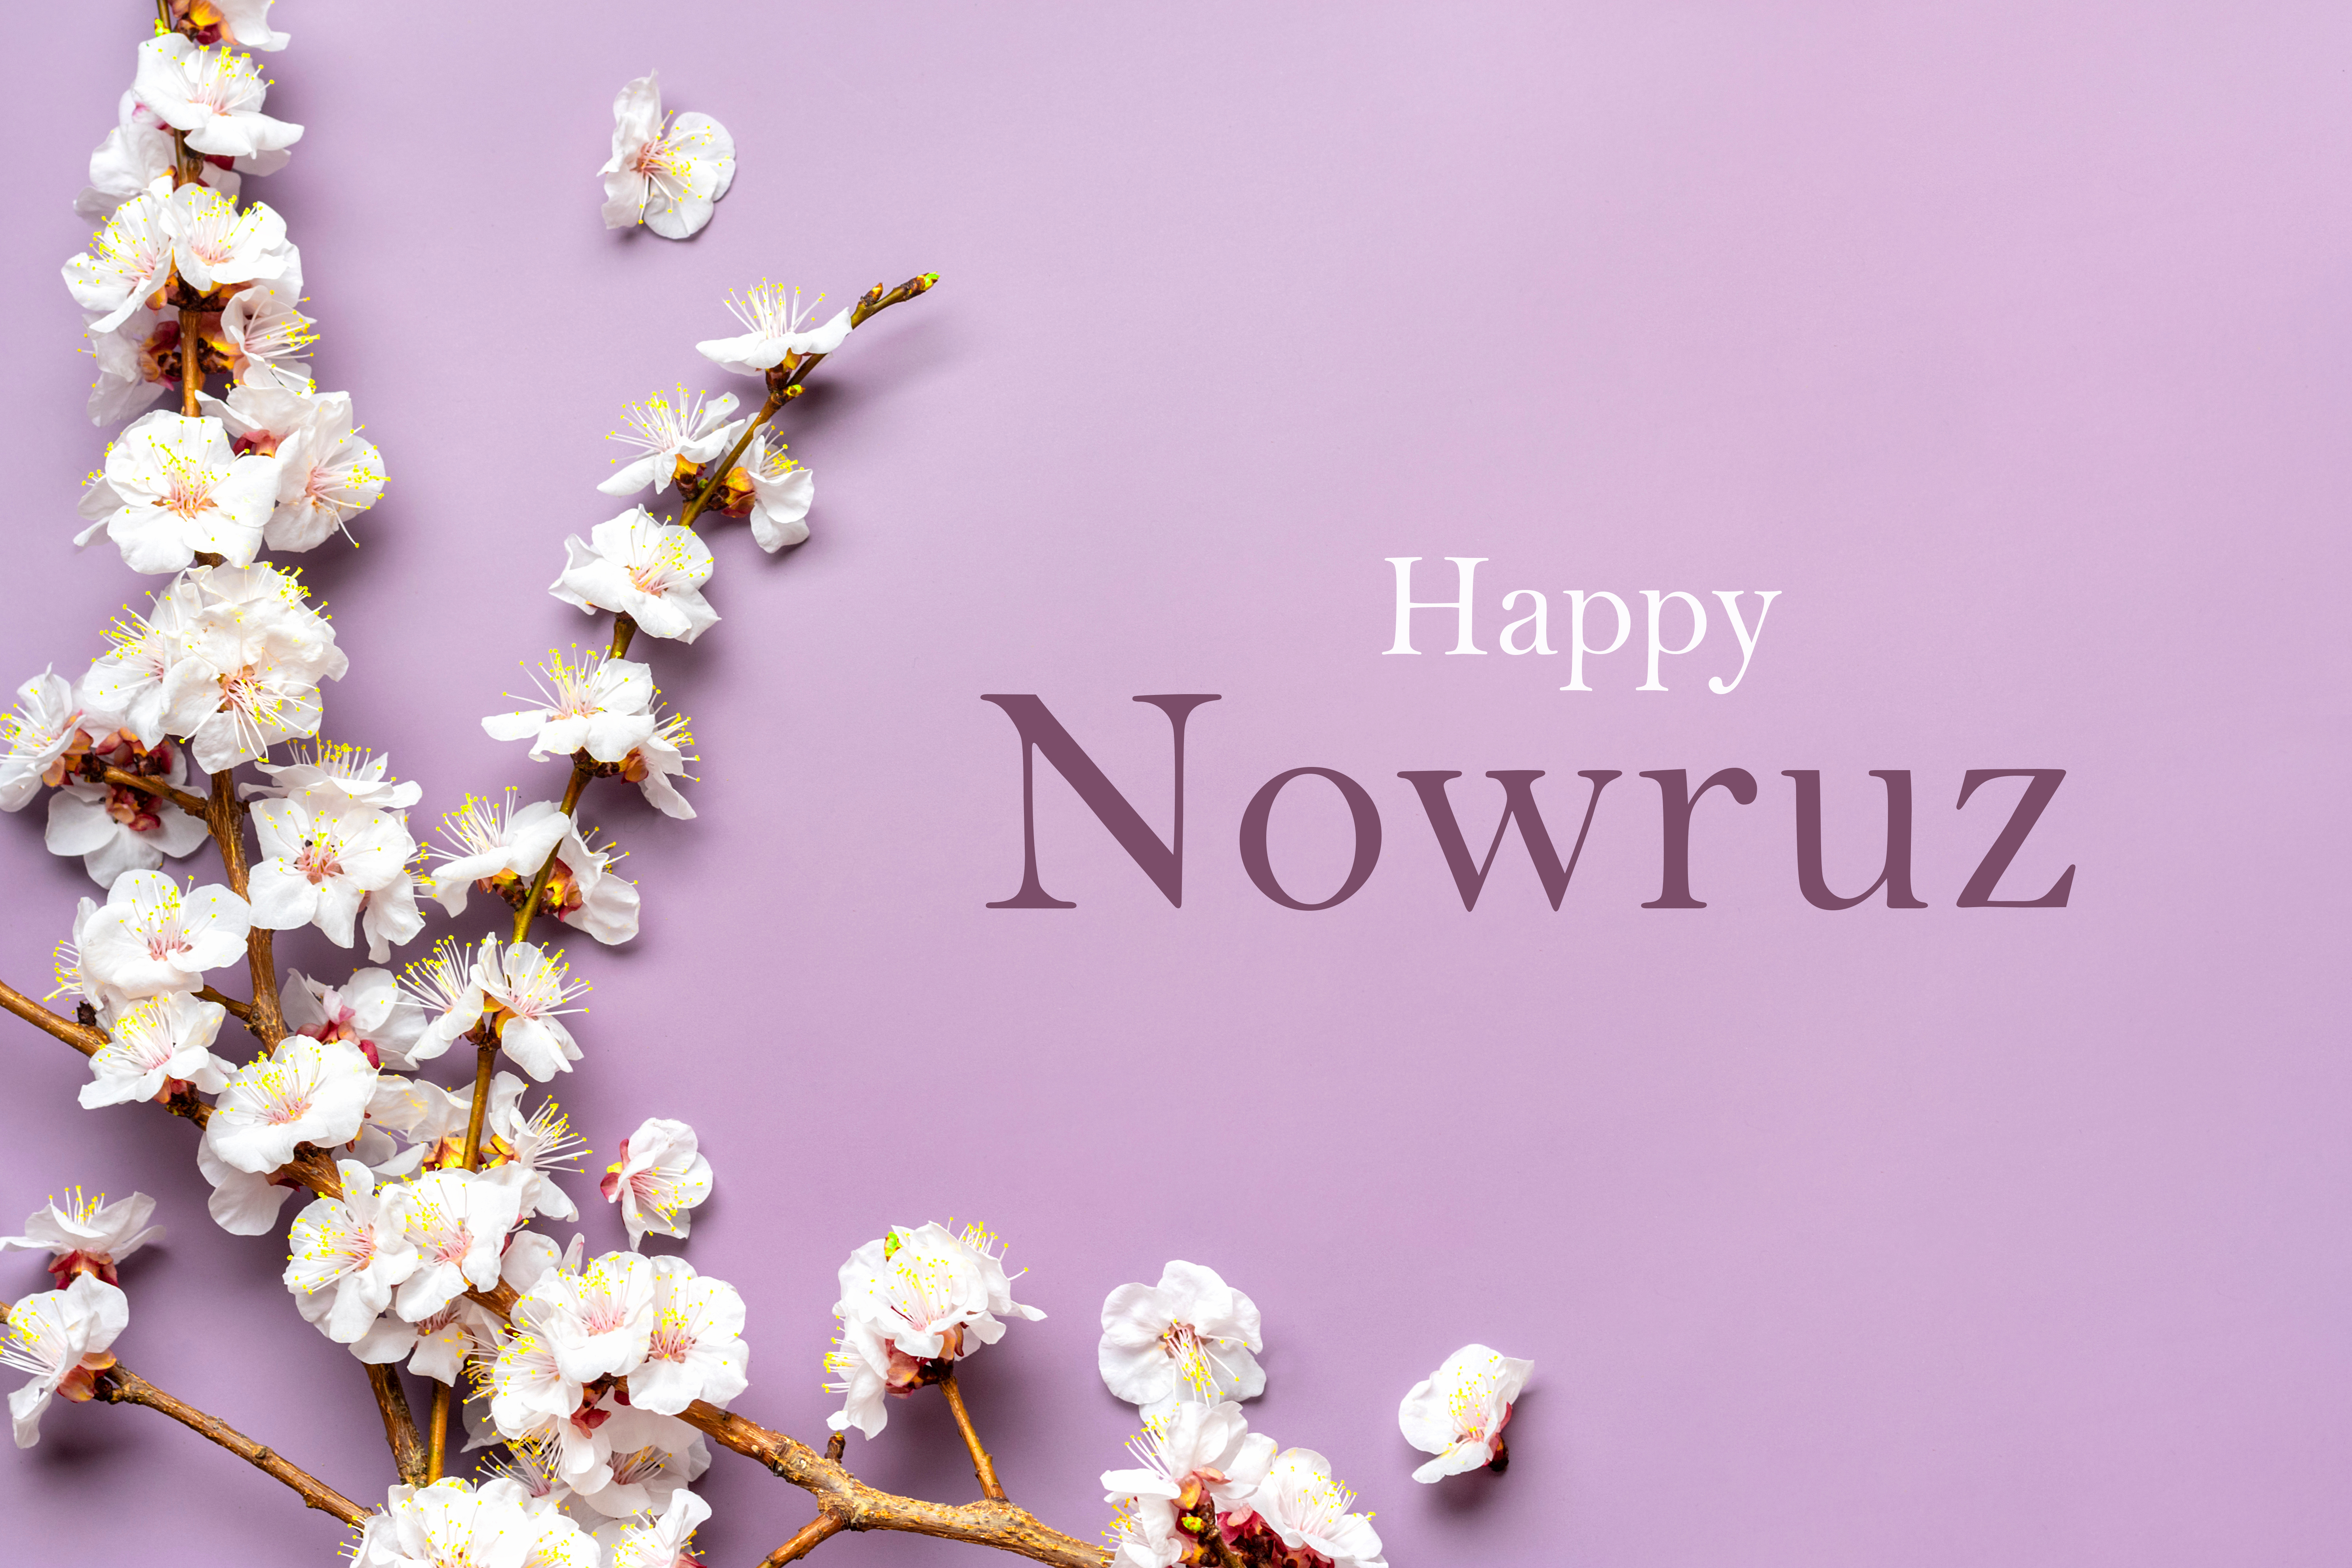 A decorative image saying "Happy Nowruz."